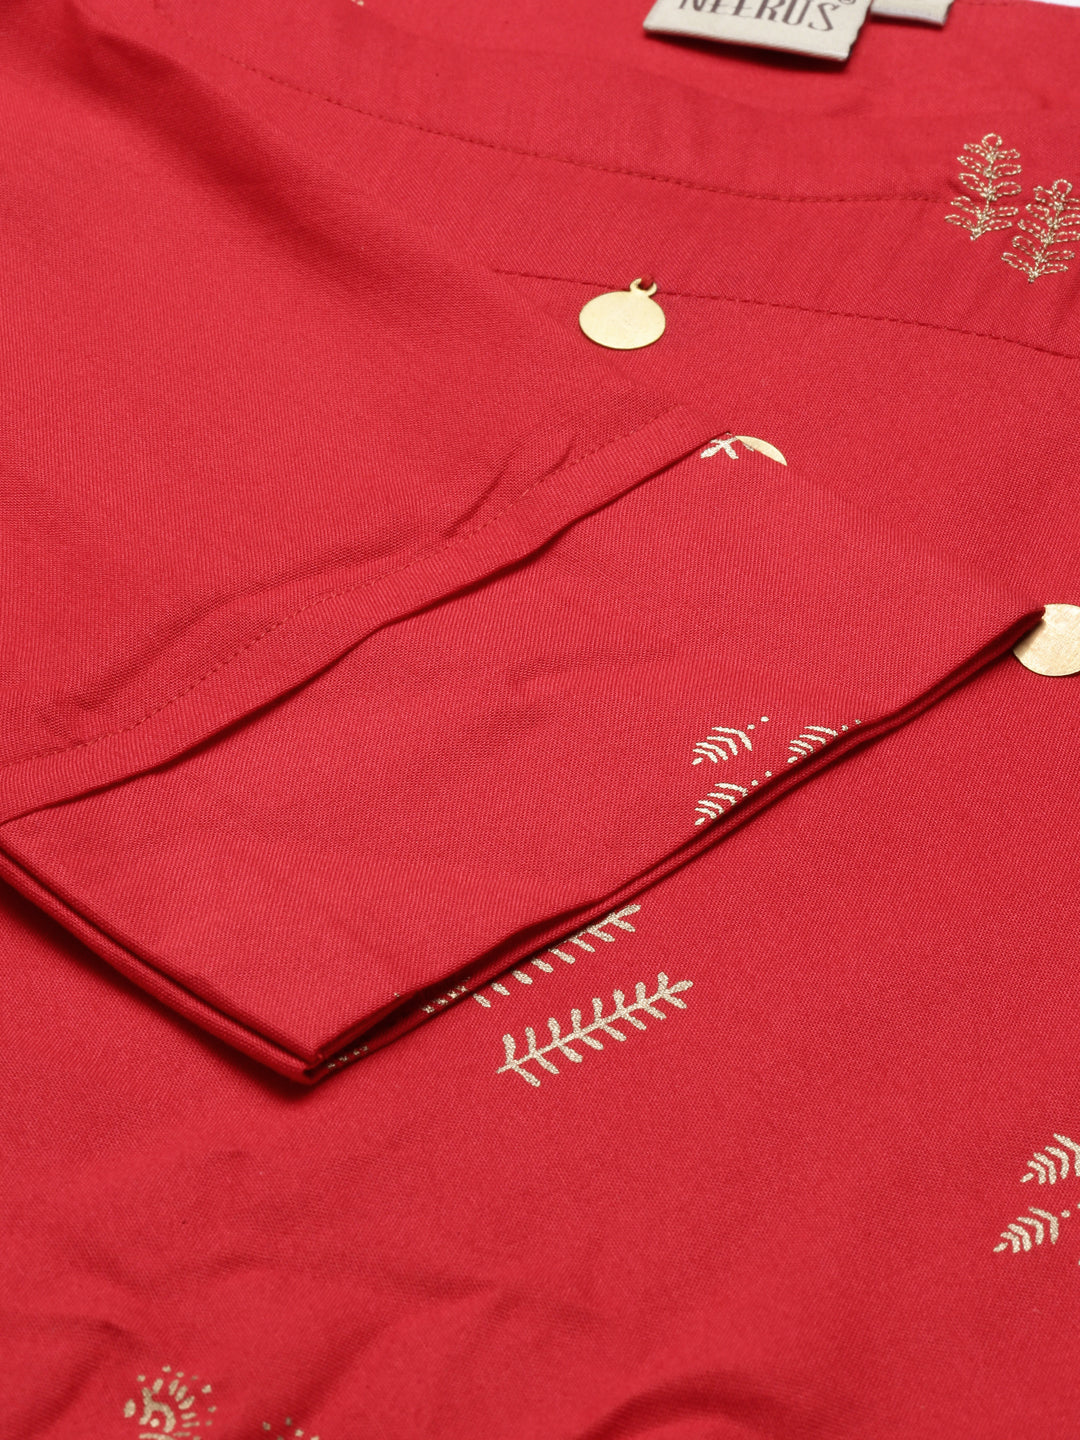 Neeru'S Red Color, Rayon Fabric Tunic